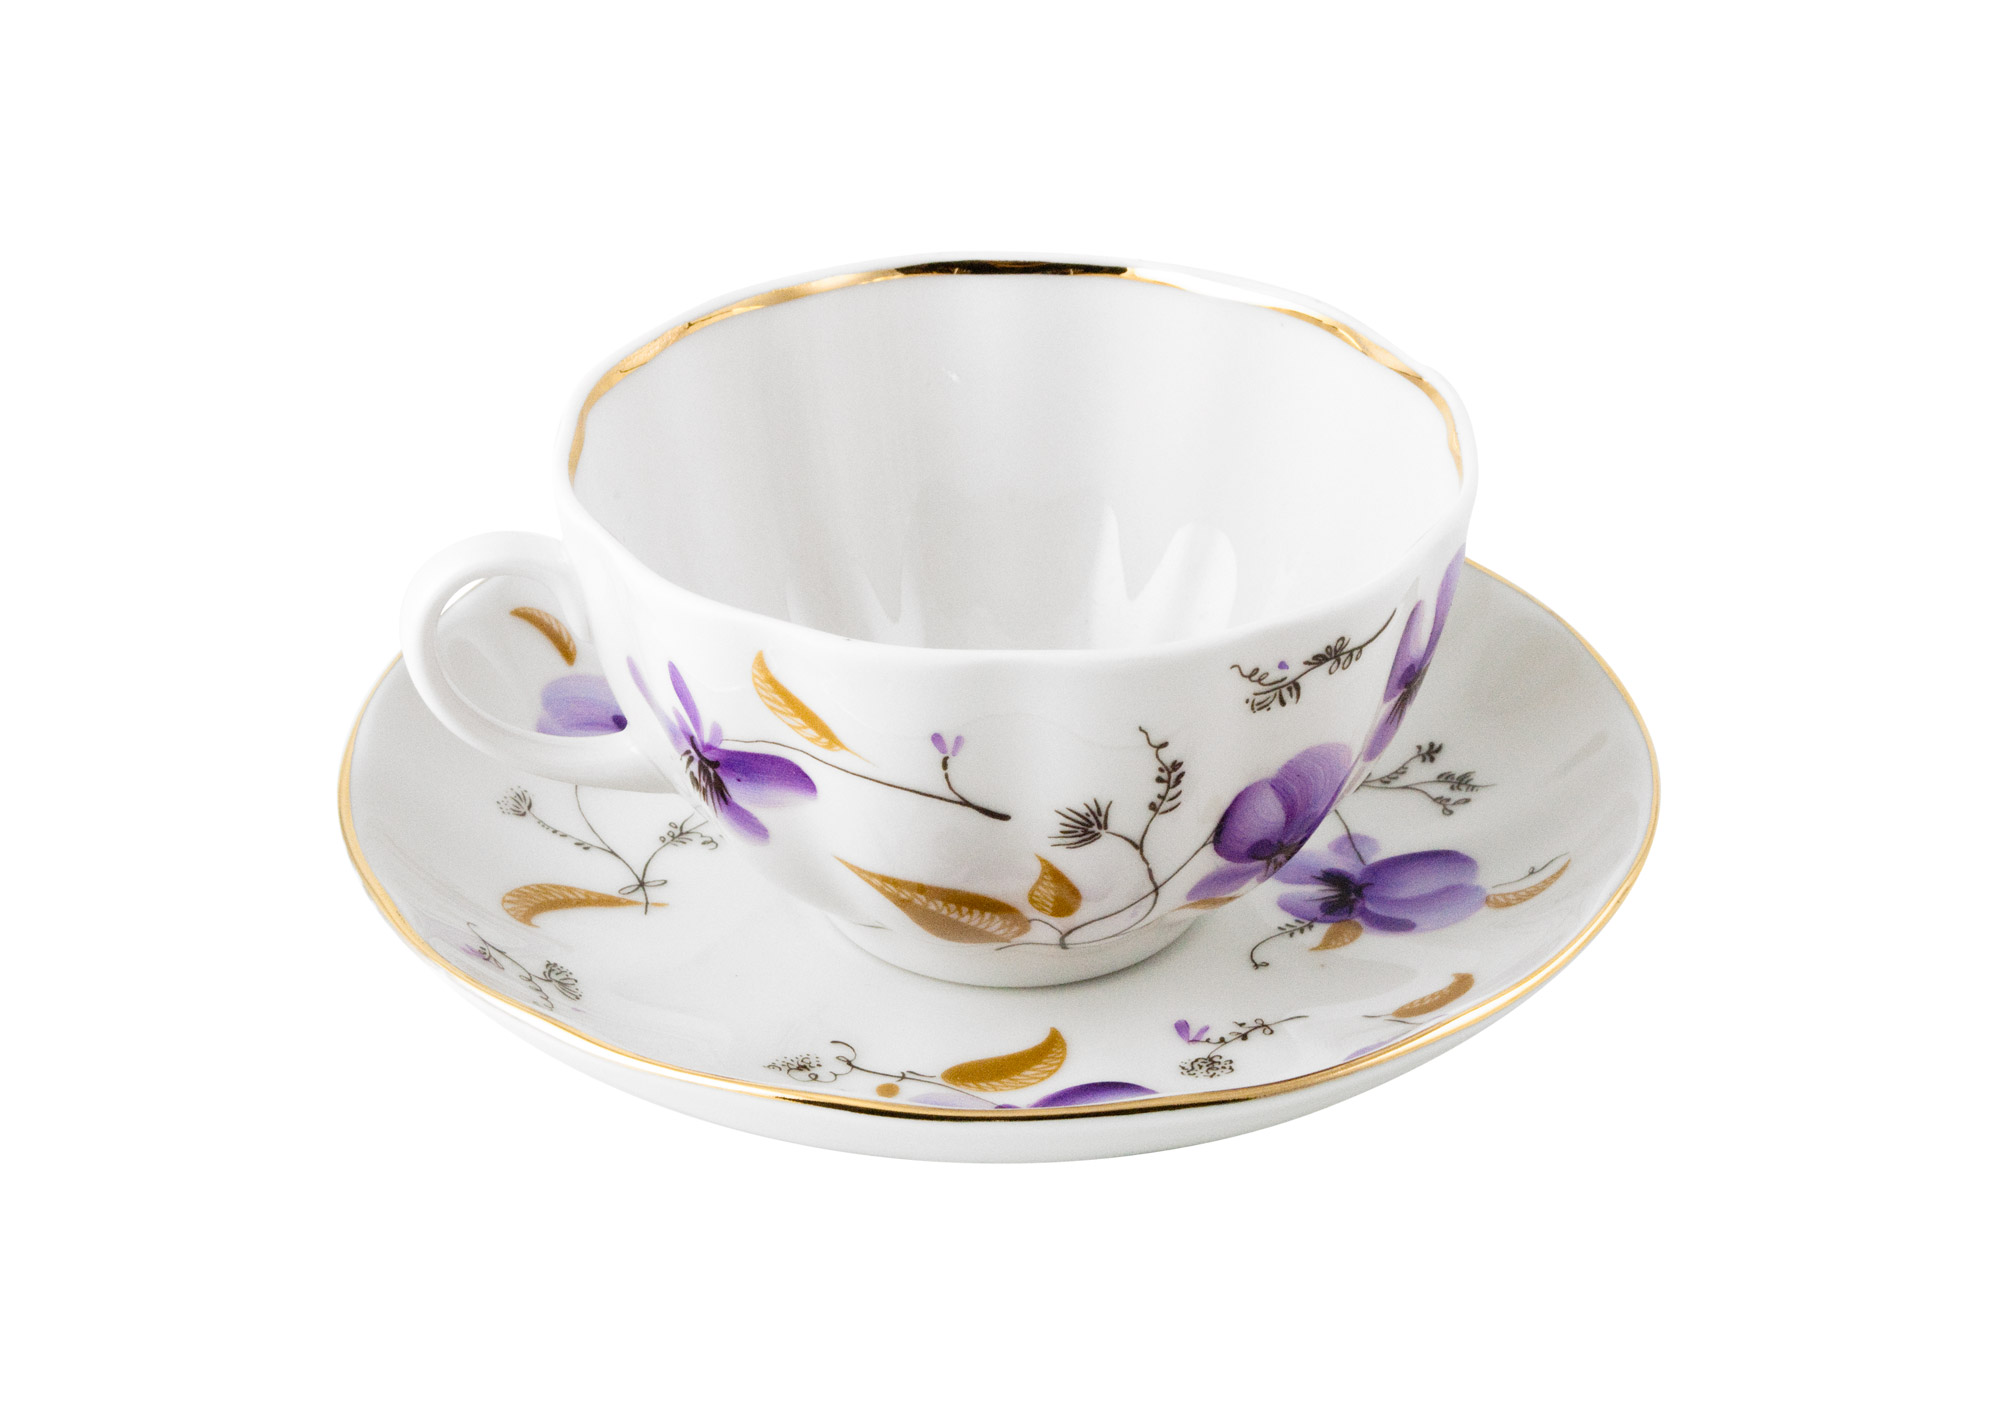 Buy Violets Tea Cup and Saucer at GoldenCockerel.com